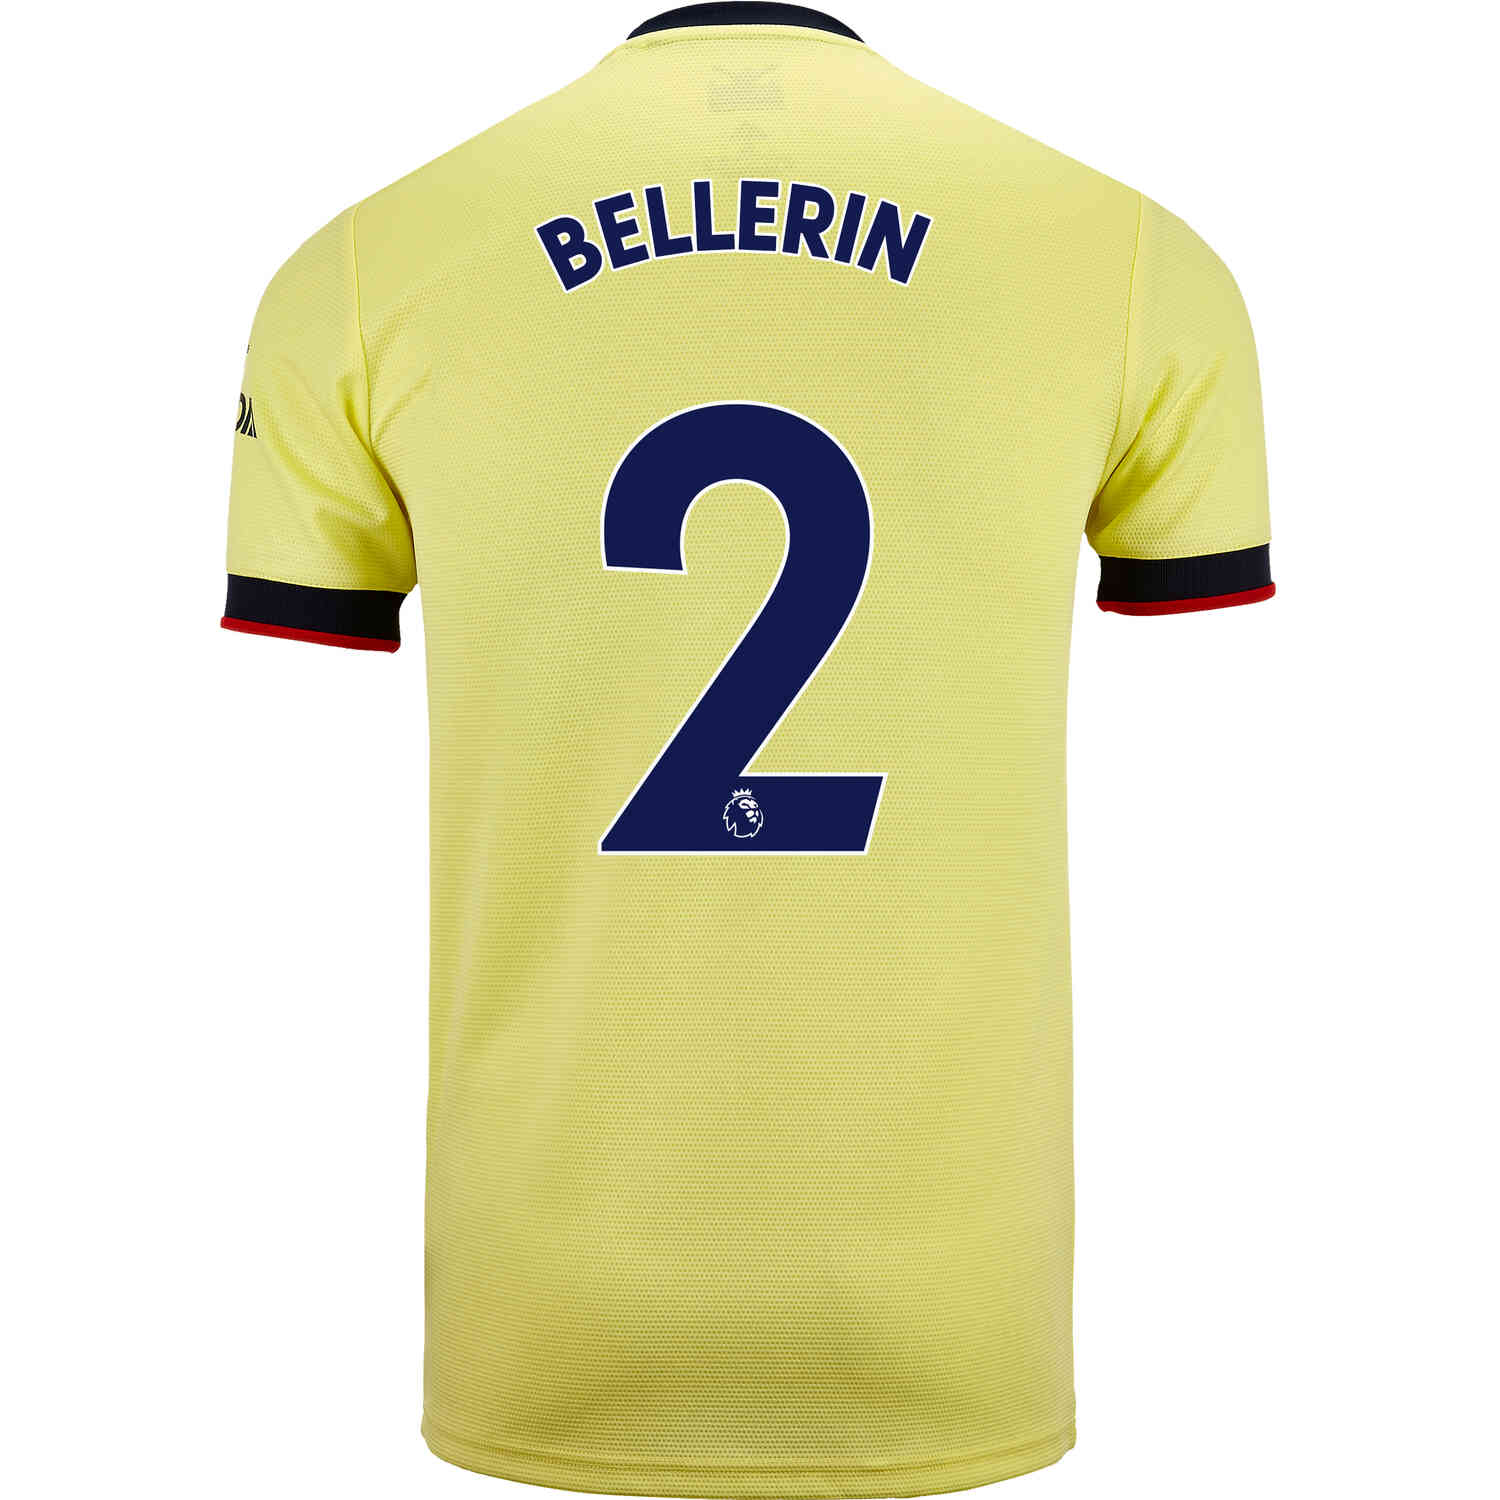 Fokohaela Create Custom Arsenal Jersey For Hector Bellerin - SoccerBible